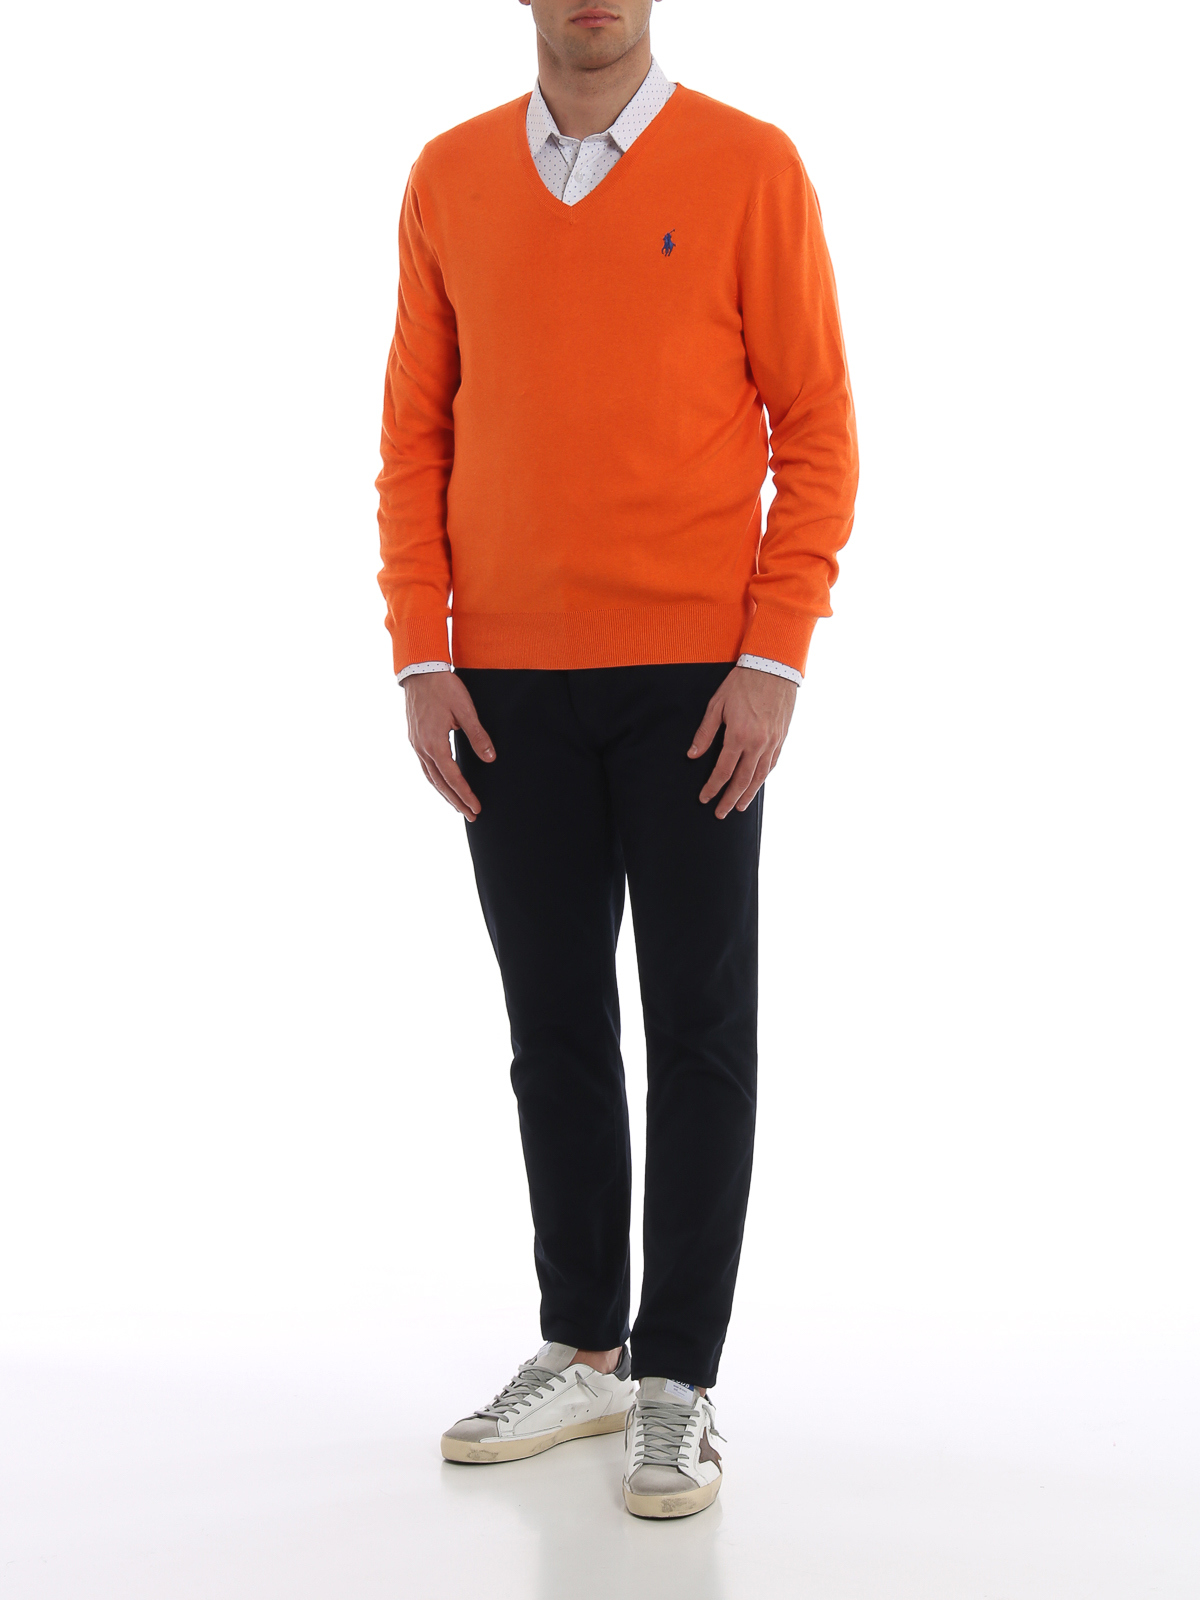 V-neck Lauren sweater cotton - V Polo necks orange - Slim A40S4602C4782 fit Ralph